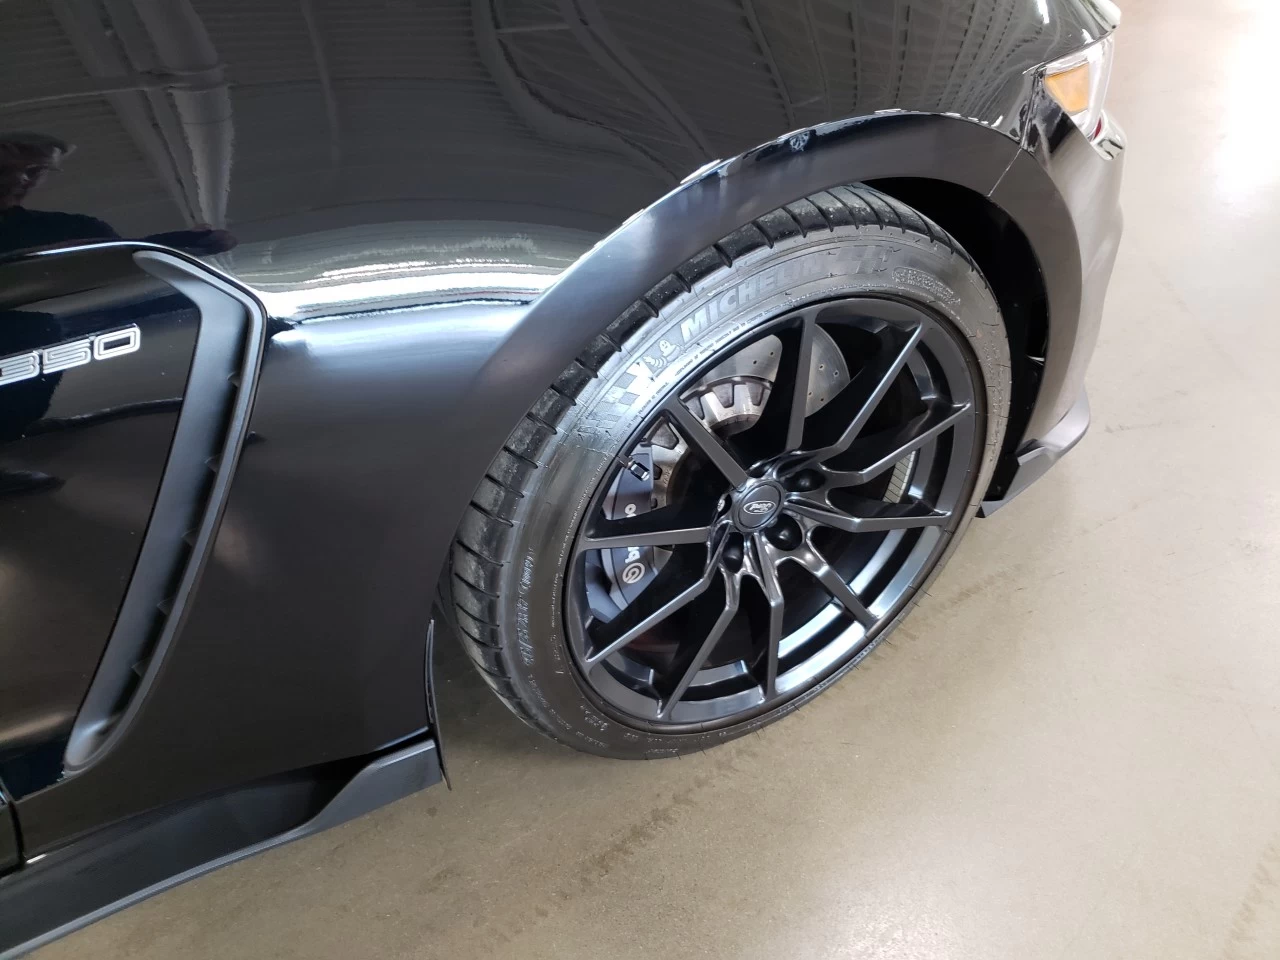 2017 Ford Mustang Shelby https://www.lombardihonda.com/resize/b990ff35b810a3abc0cc817b2ca24889-1